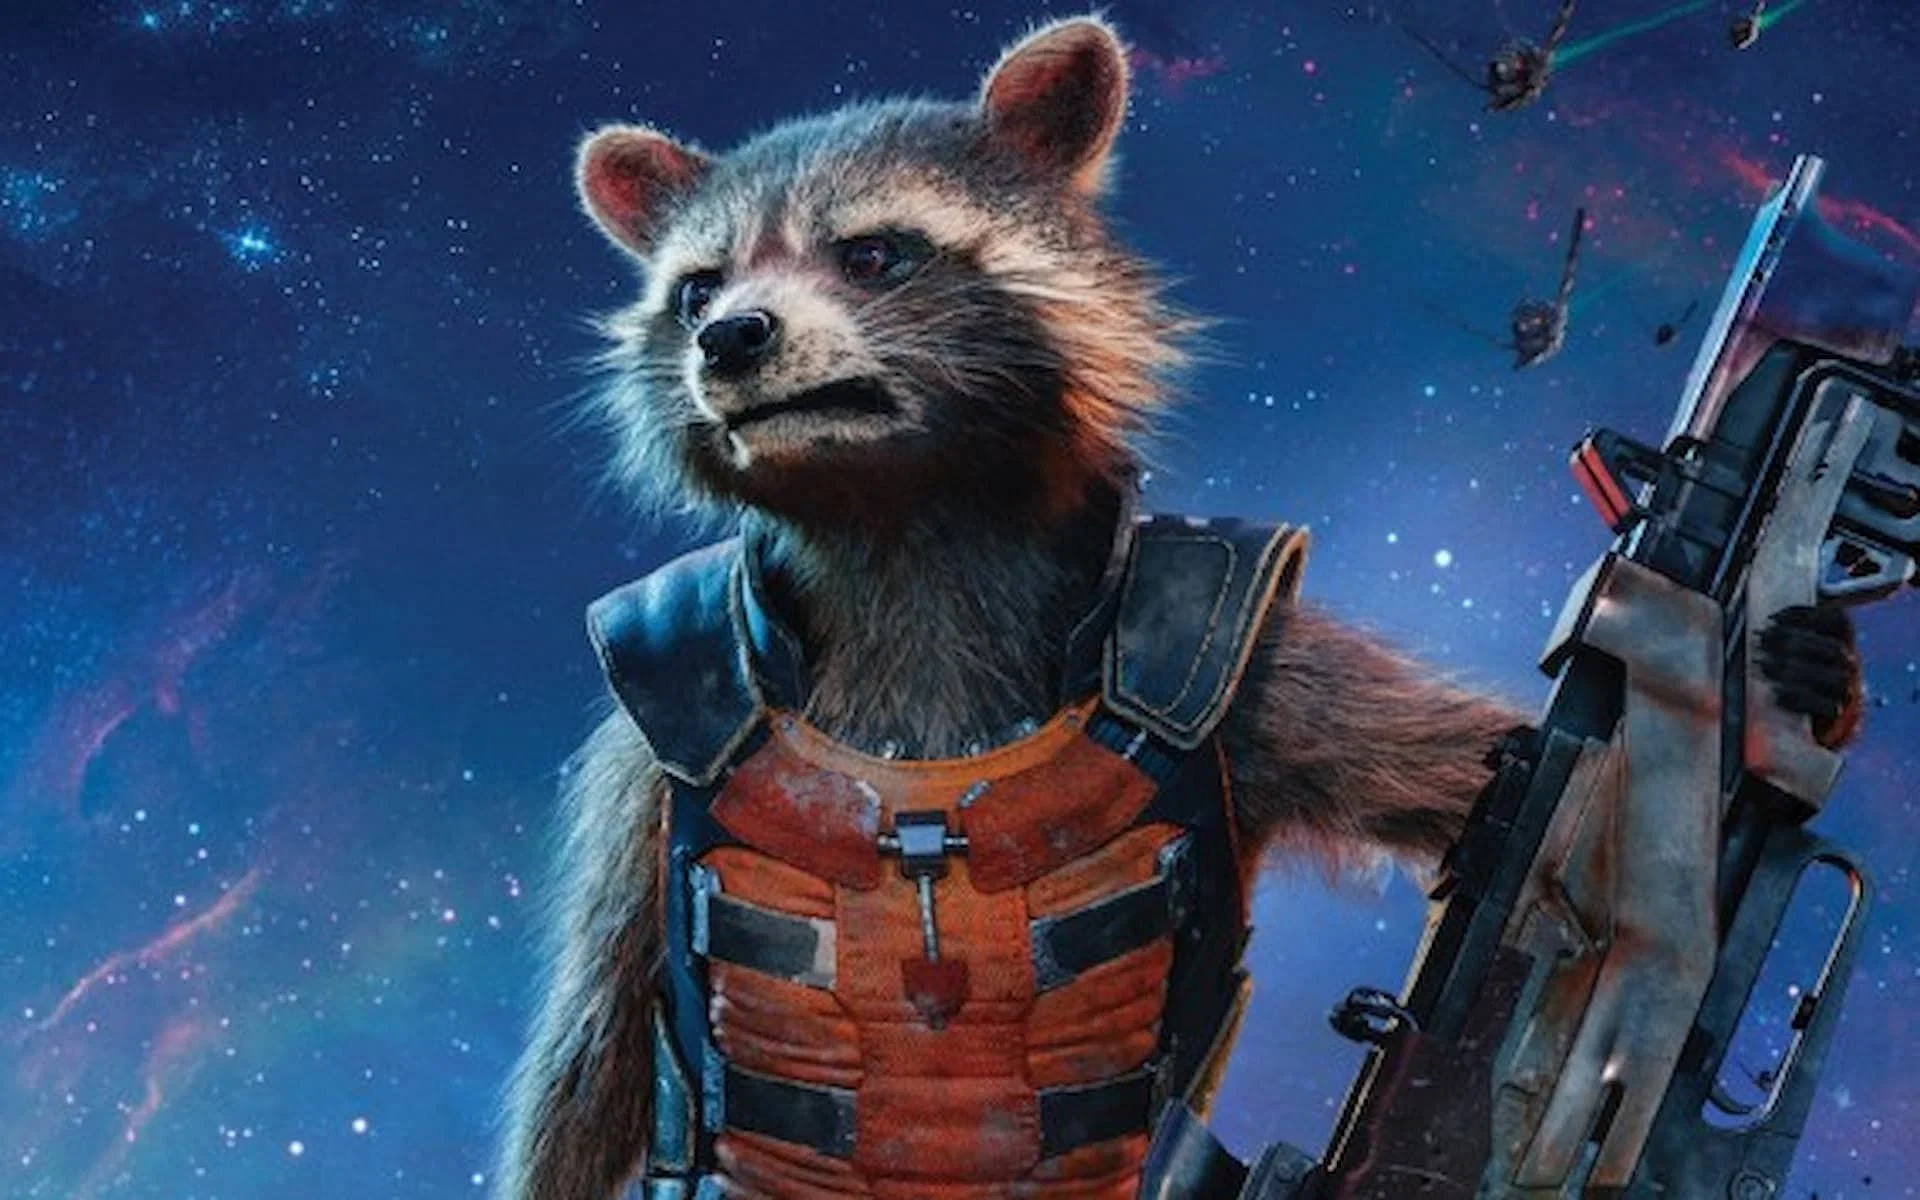 Rocket Raccoon in MCU (Marvel Cinematic Universe)